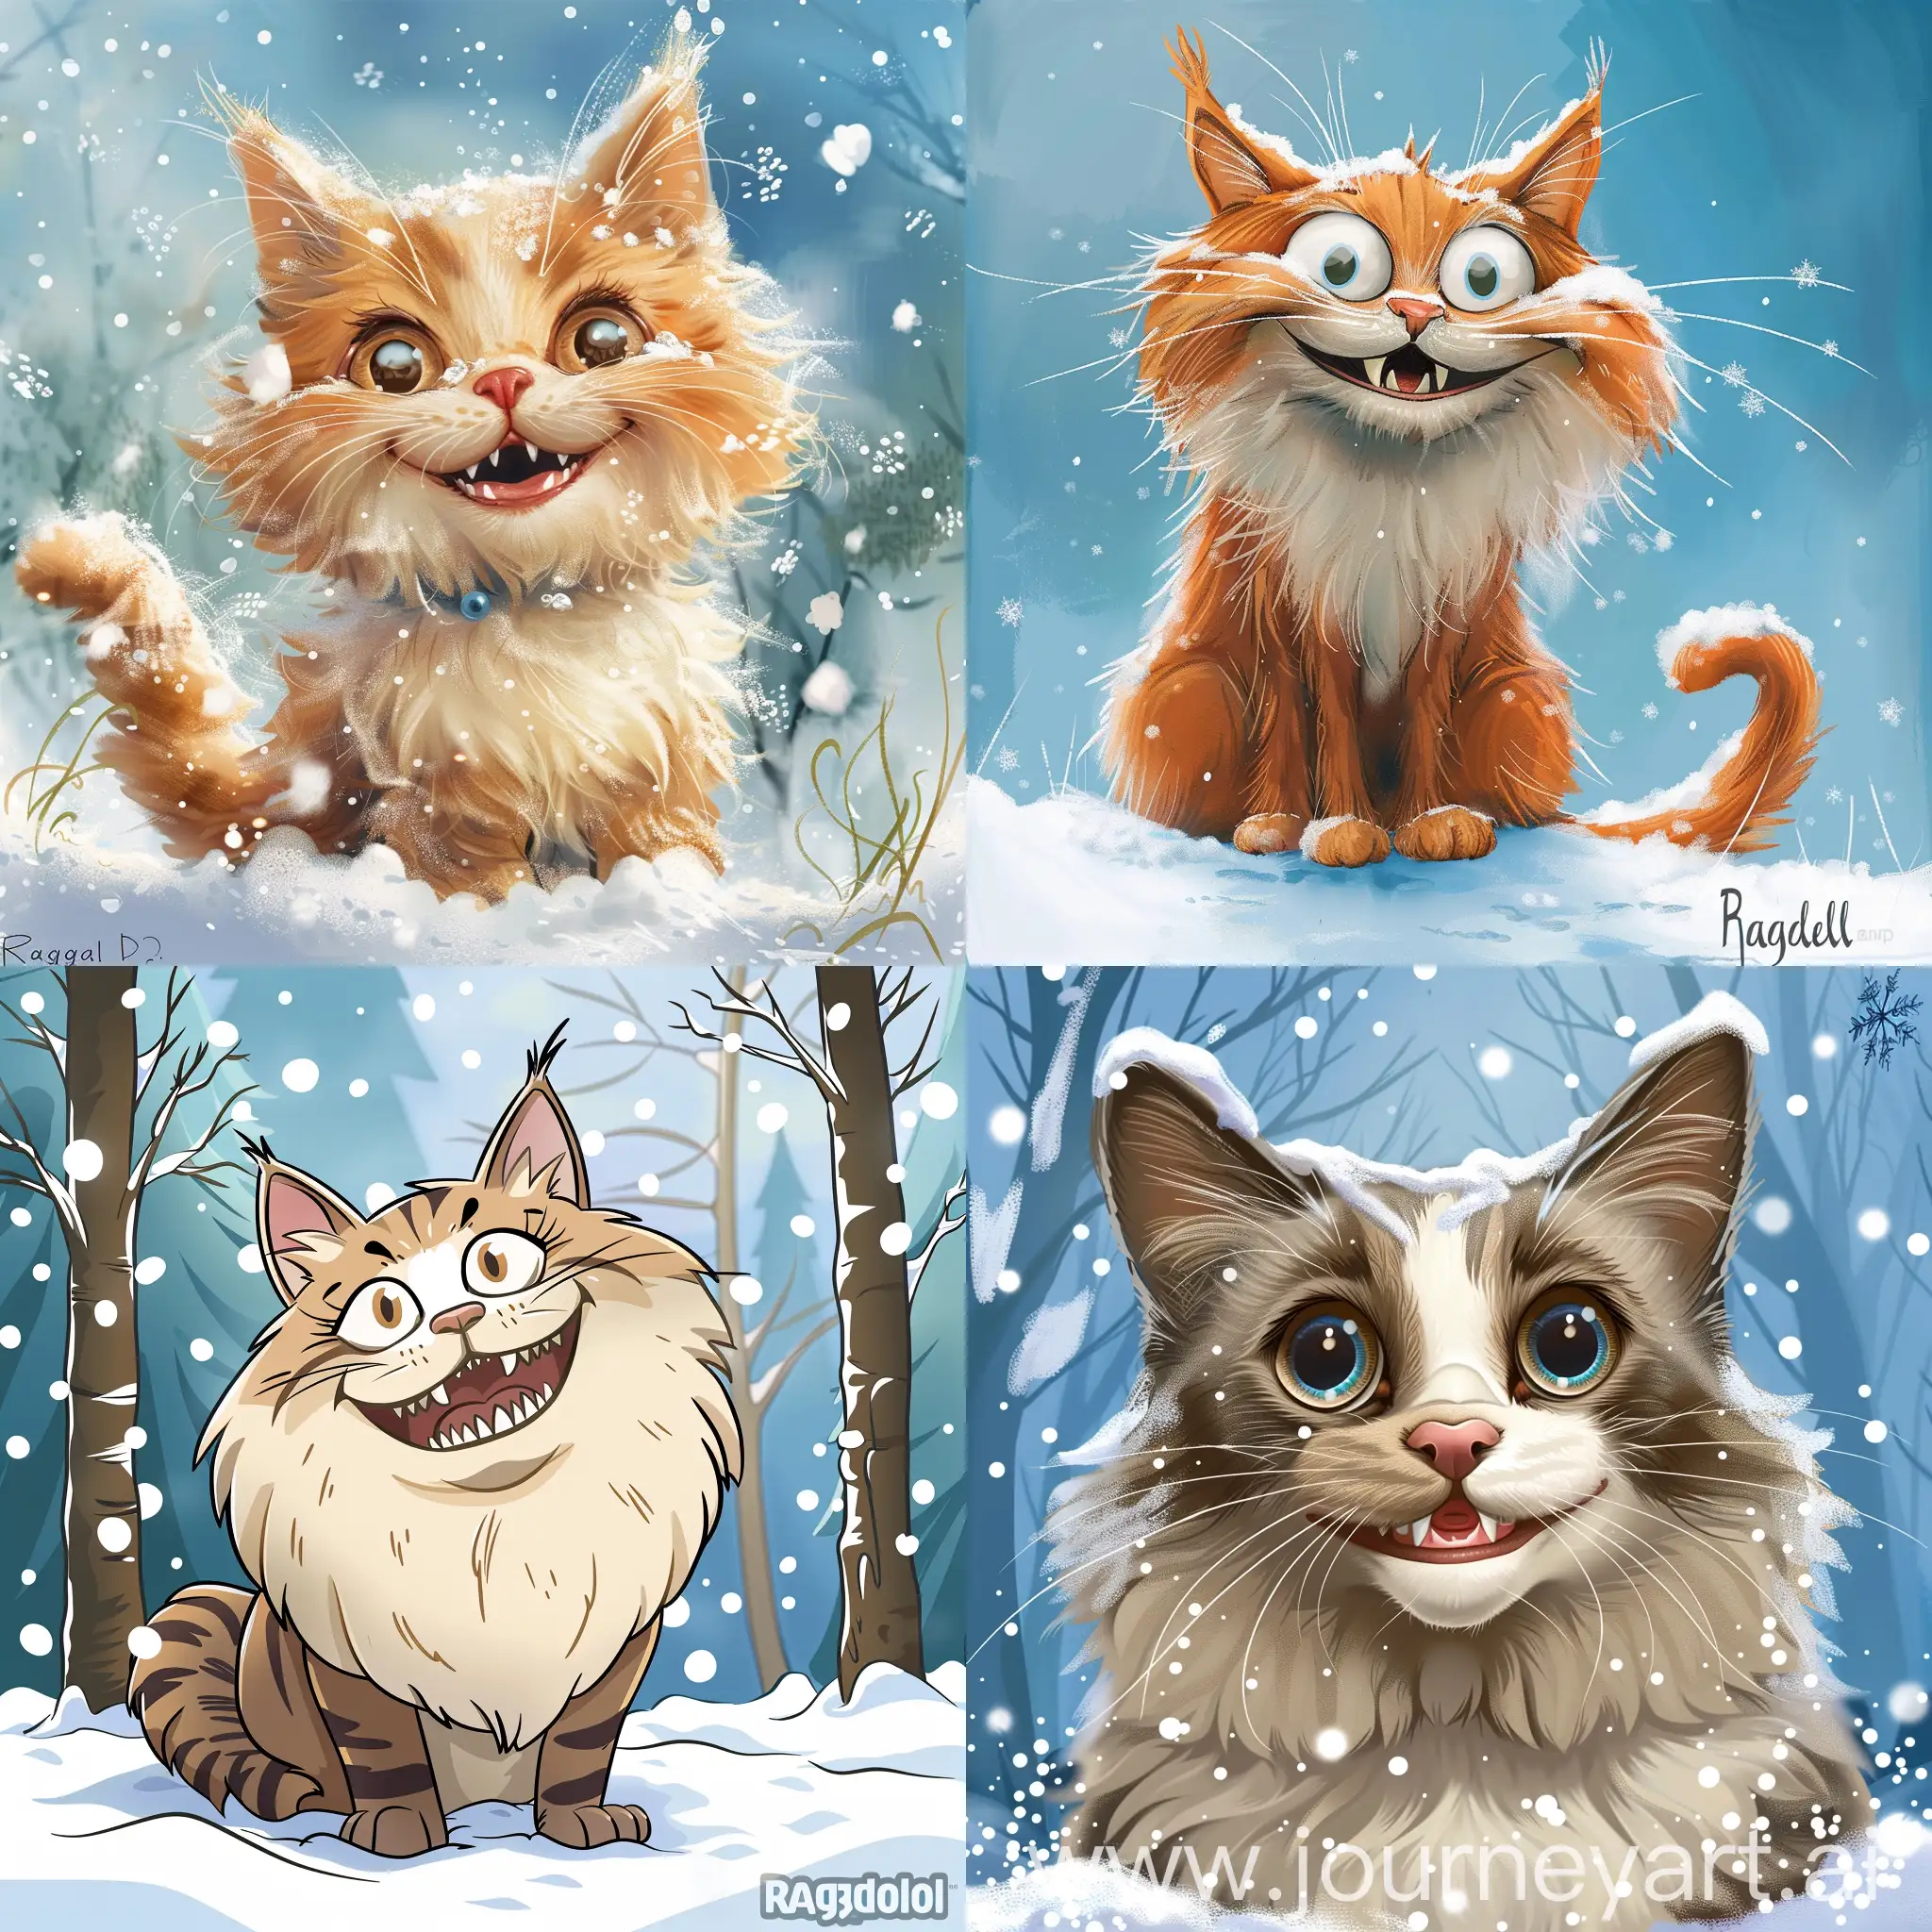 Cheerful-Cartoon-Ragdoll-Cat-Enjoying-Snowfall